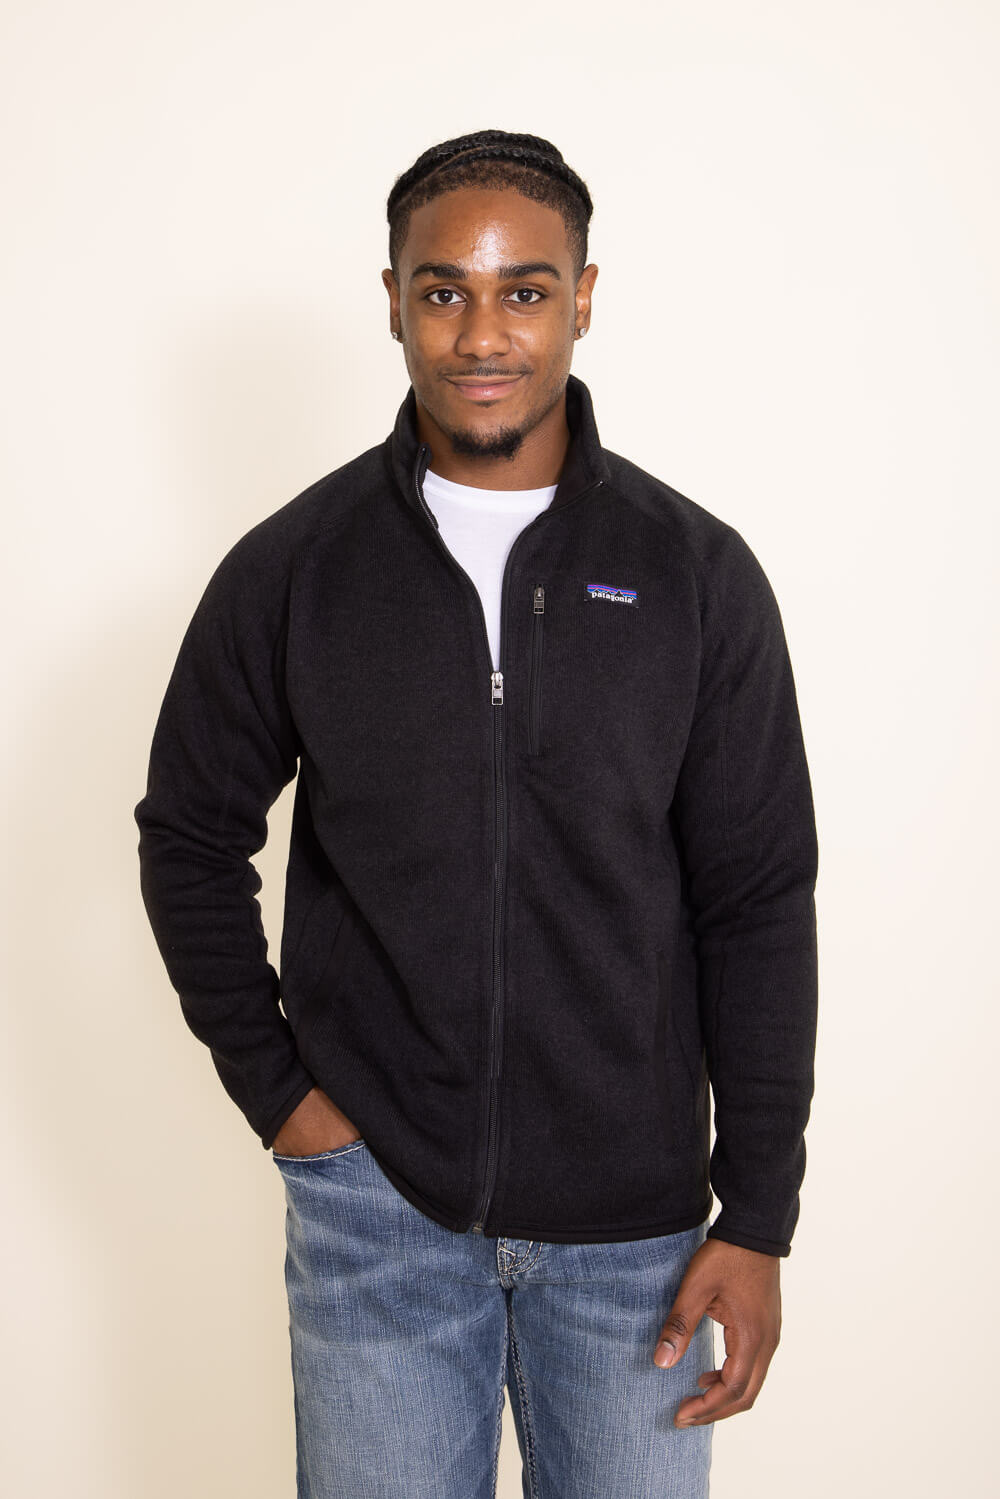 Men Zip Up Hoodie Hooded Sweatshirt Casual Coat Jacket Jumper Outwear Tops  | eBay